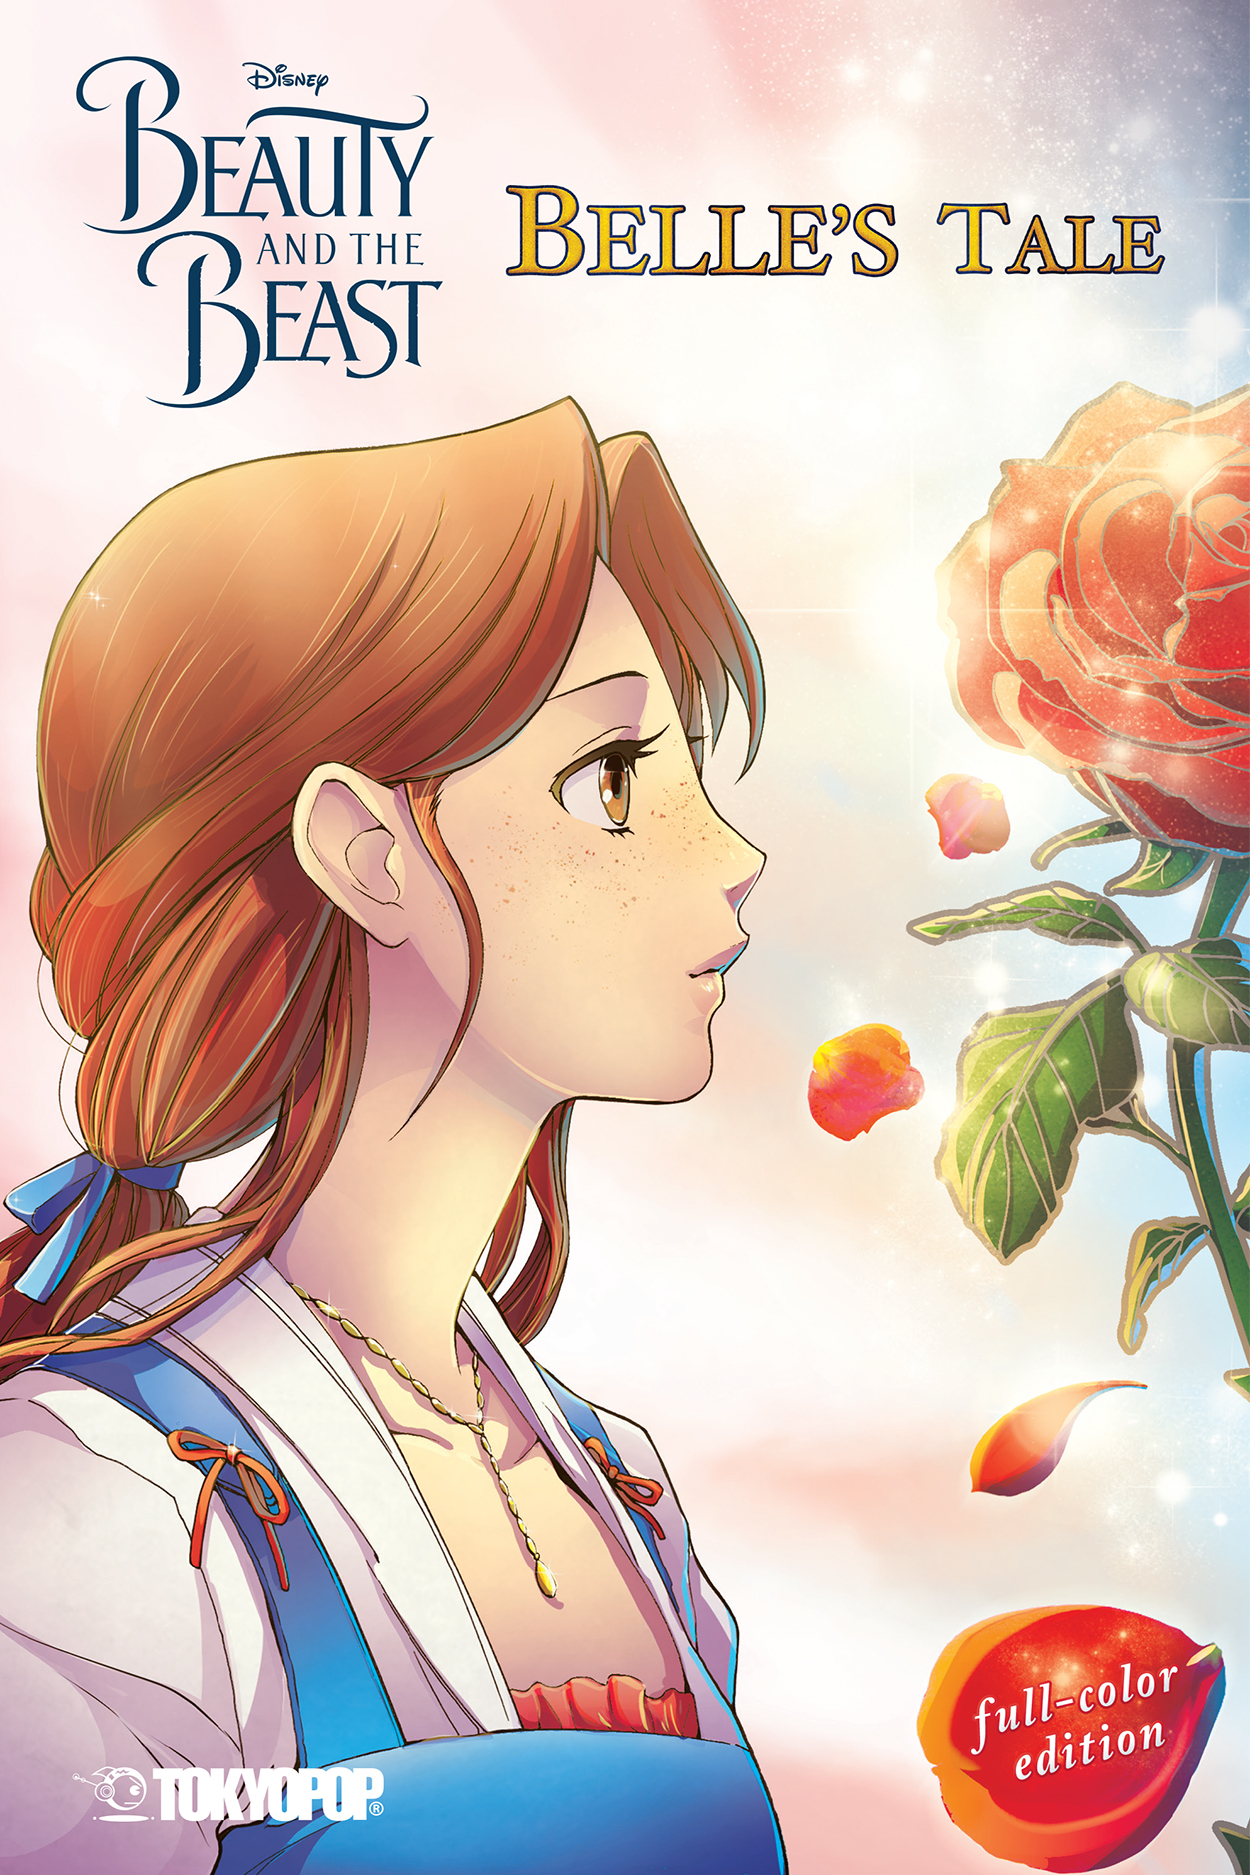 Disney Manga Beauty & Beast Belles Tale Color Edition Graphic Novel